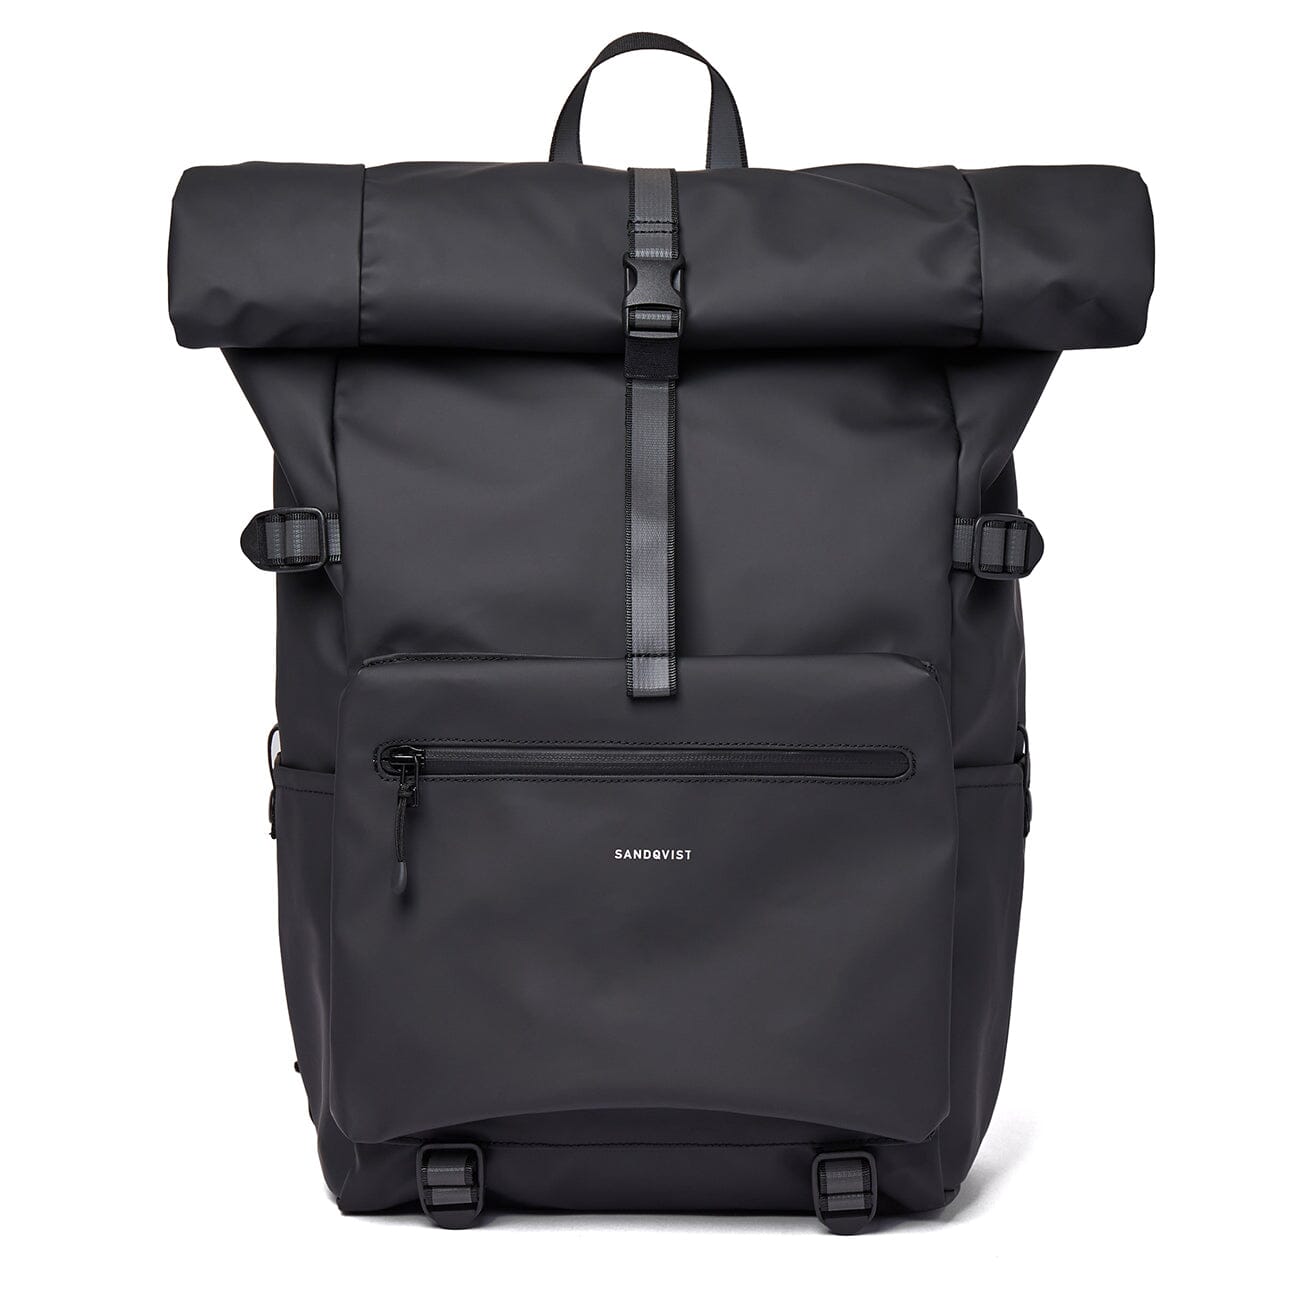 waterproof commuter backpack ruben 2 sandqvist black color front view